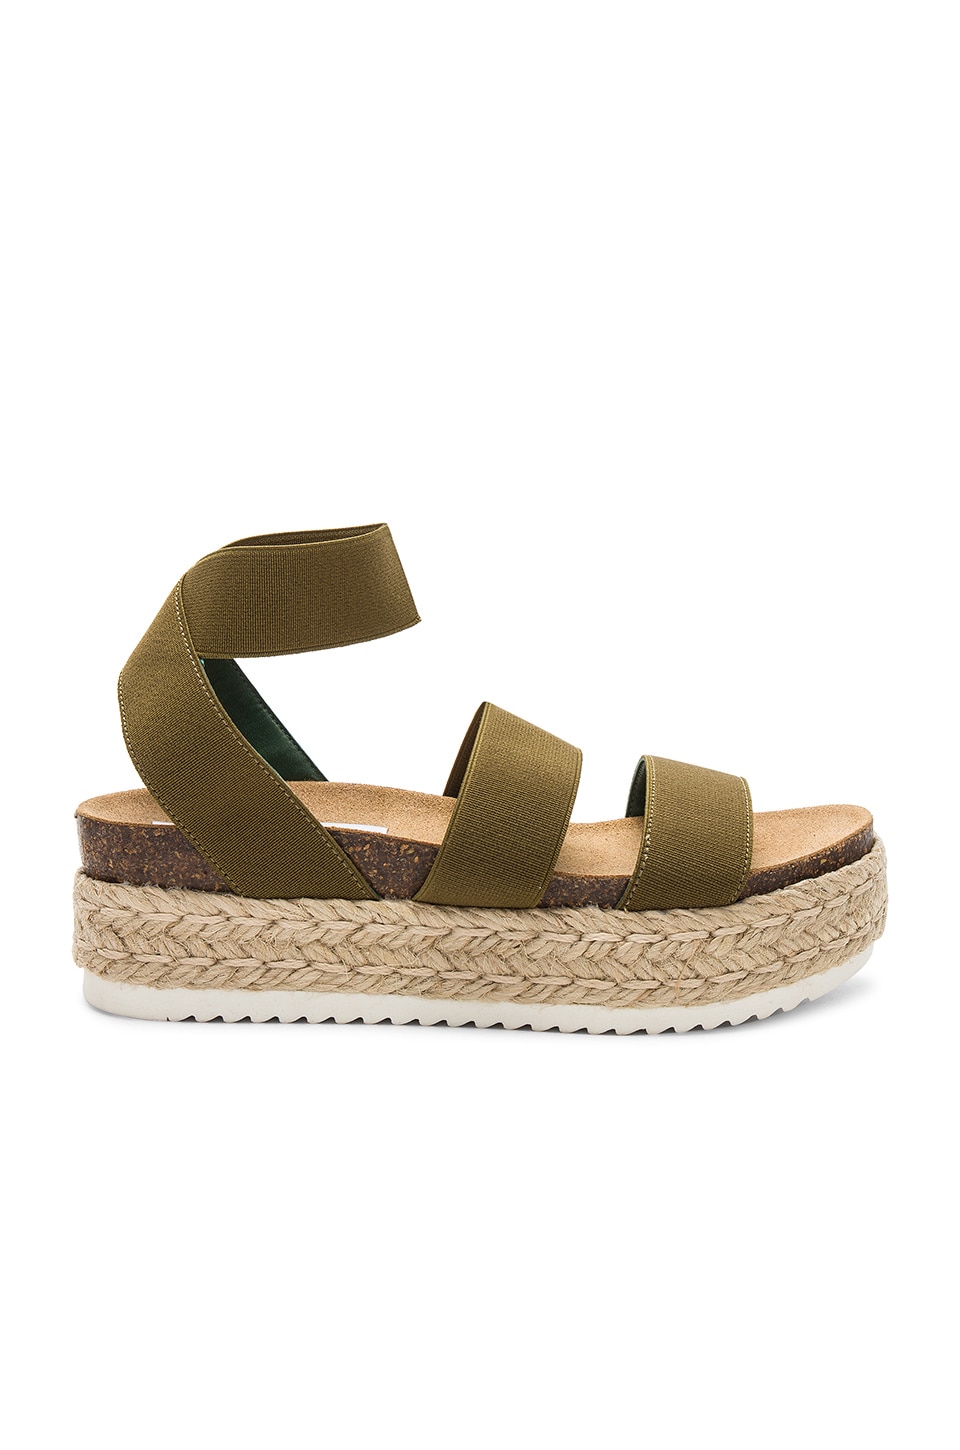 Steve Madden Kimmie Platform Sandal in Olive | REVOLVE